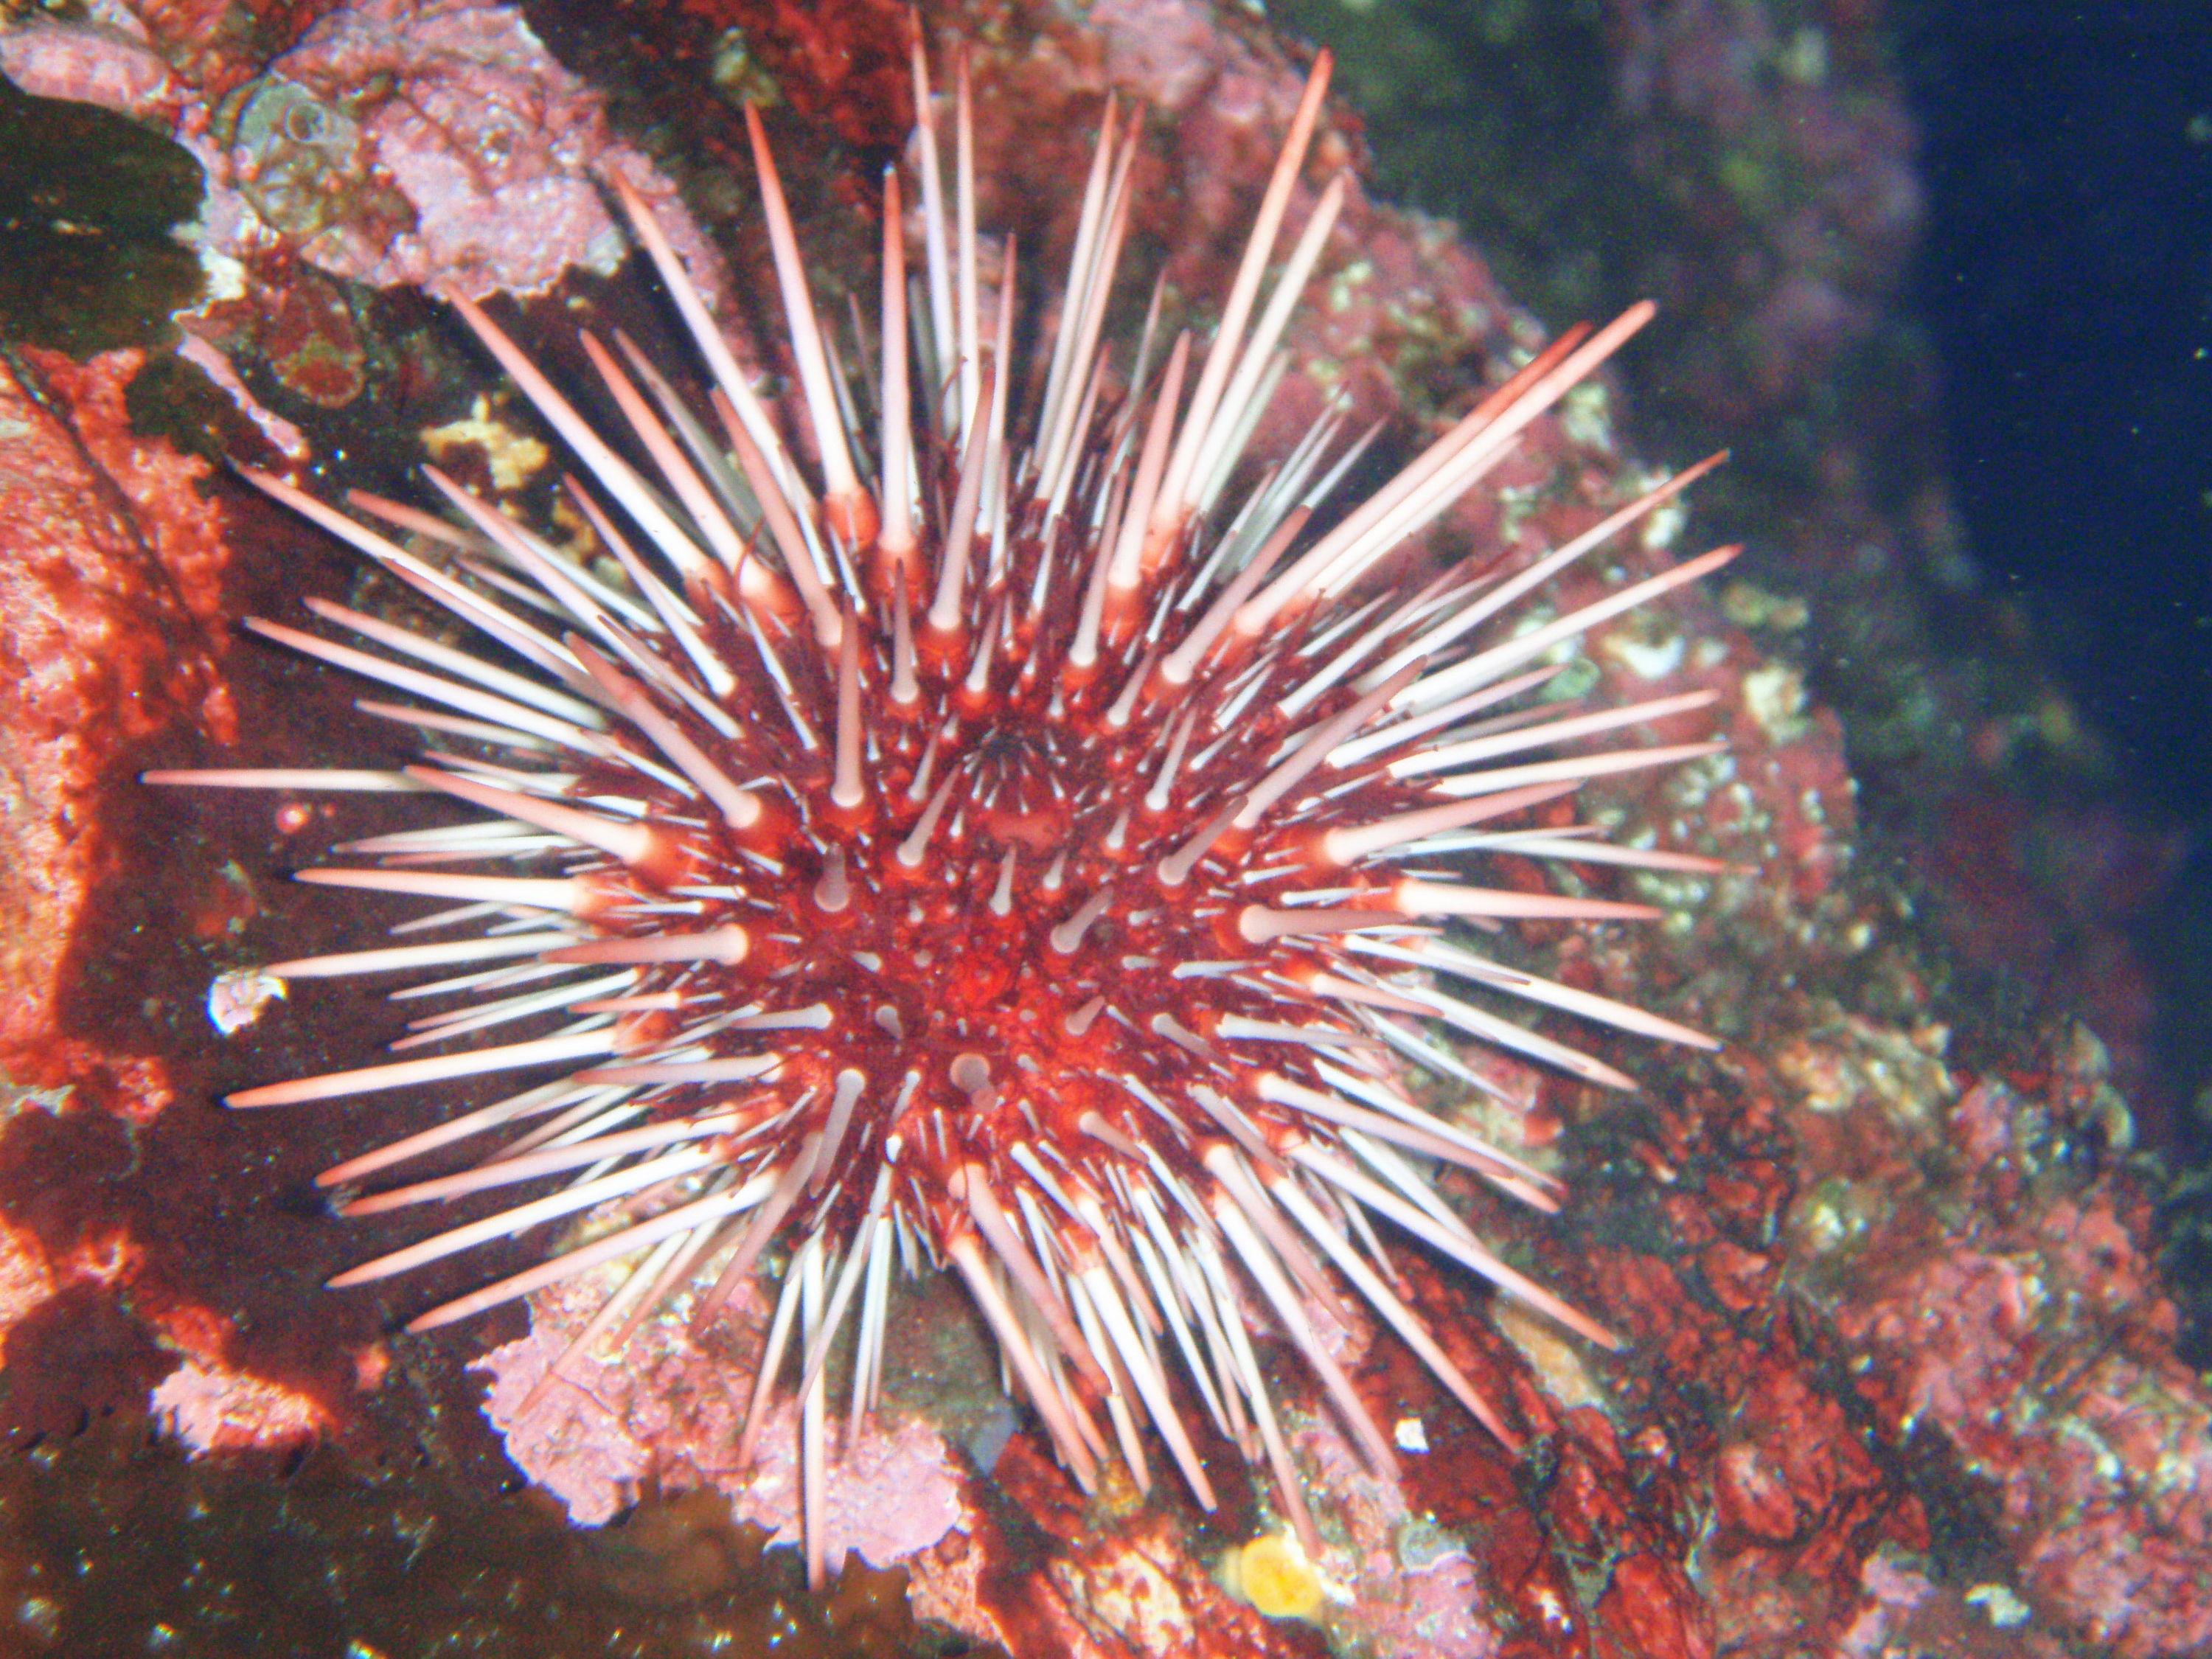 Red Urchin